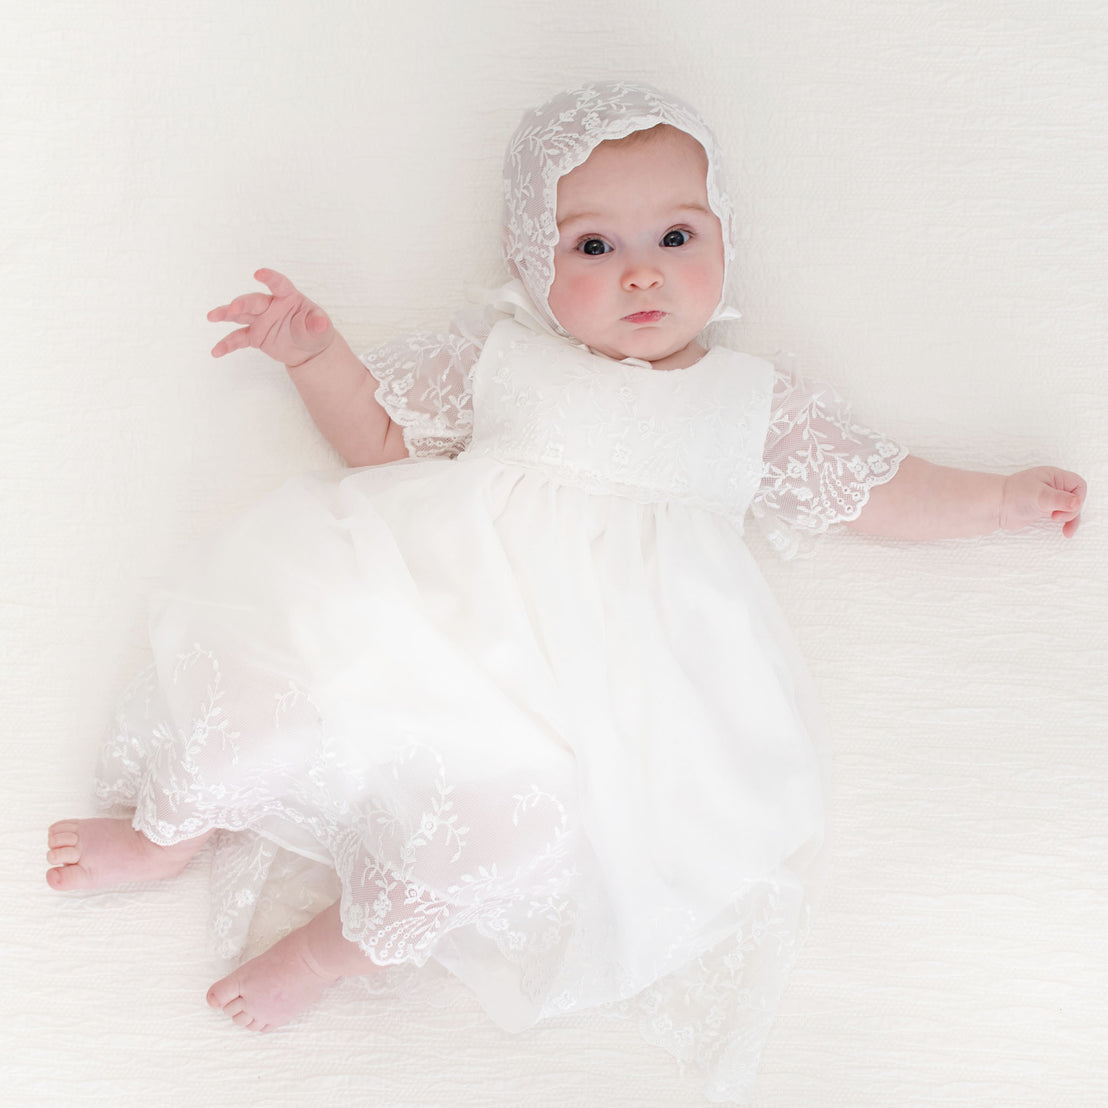 Baby girl wearing Ella Romper Dress and Bonnet.